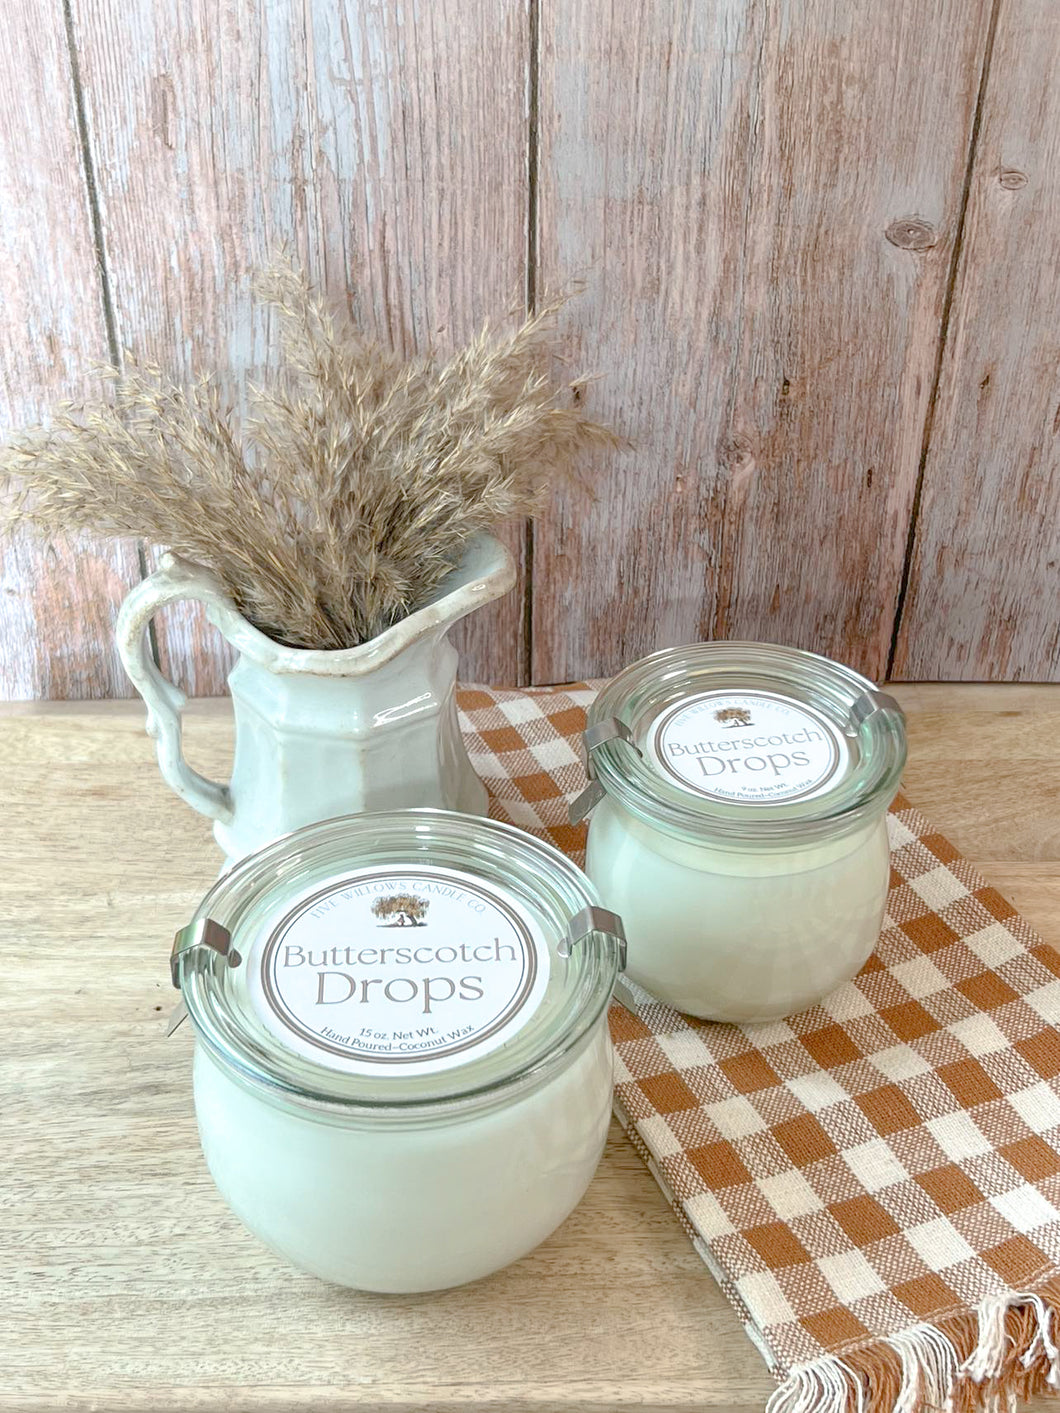 Butterscotch Drops 15 oz. European Preserve Jar